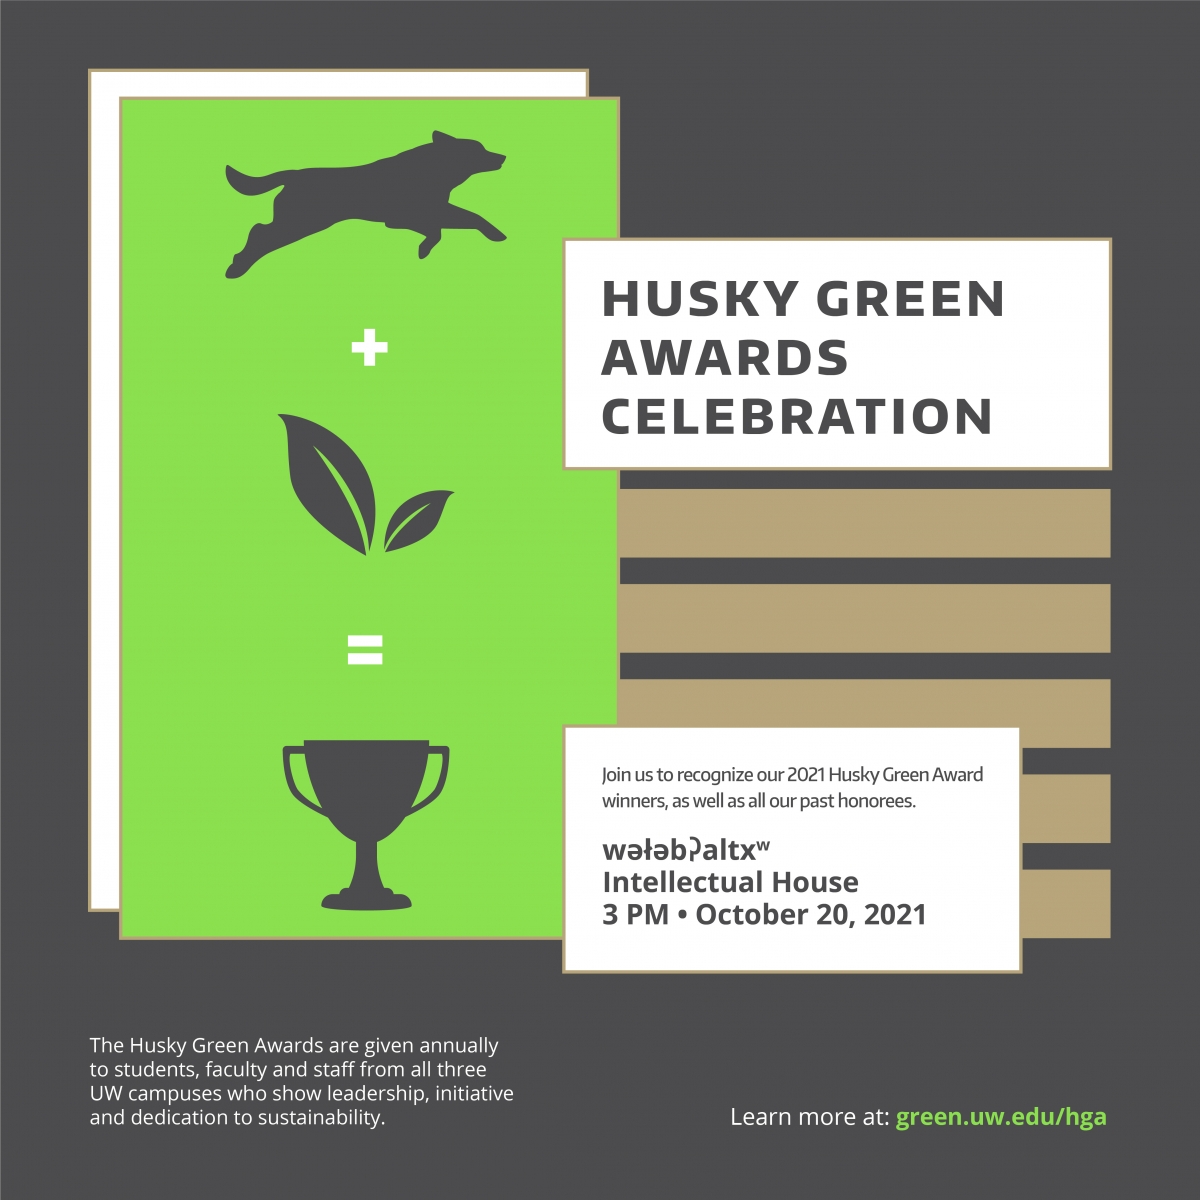 Husky Green Award celebration image